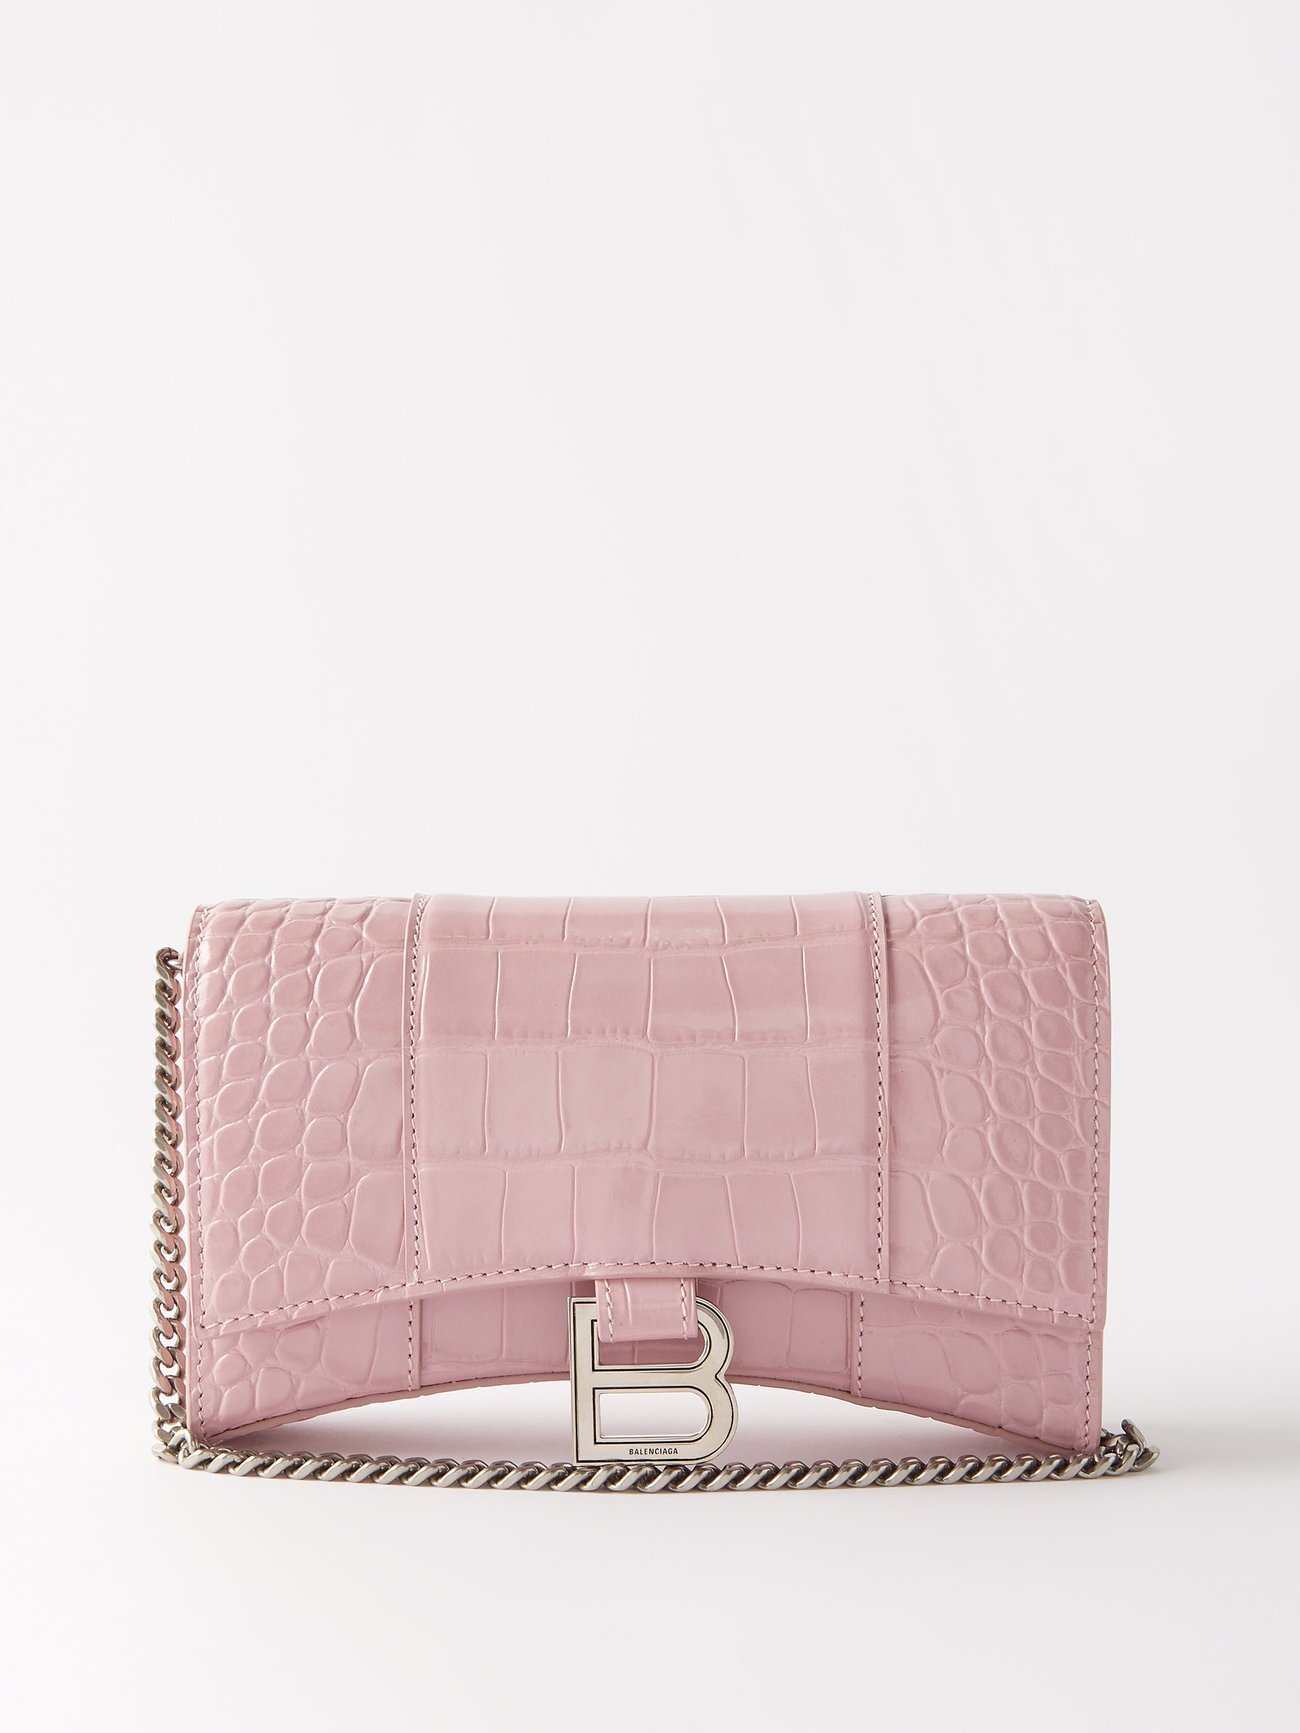 Balenciaga - Hourglass Crocodile-effect Leather Cross-body Bag - Womens - Light Pink